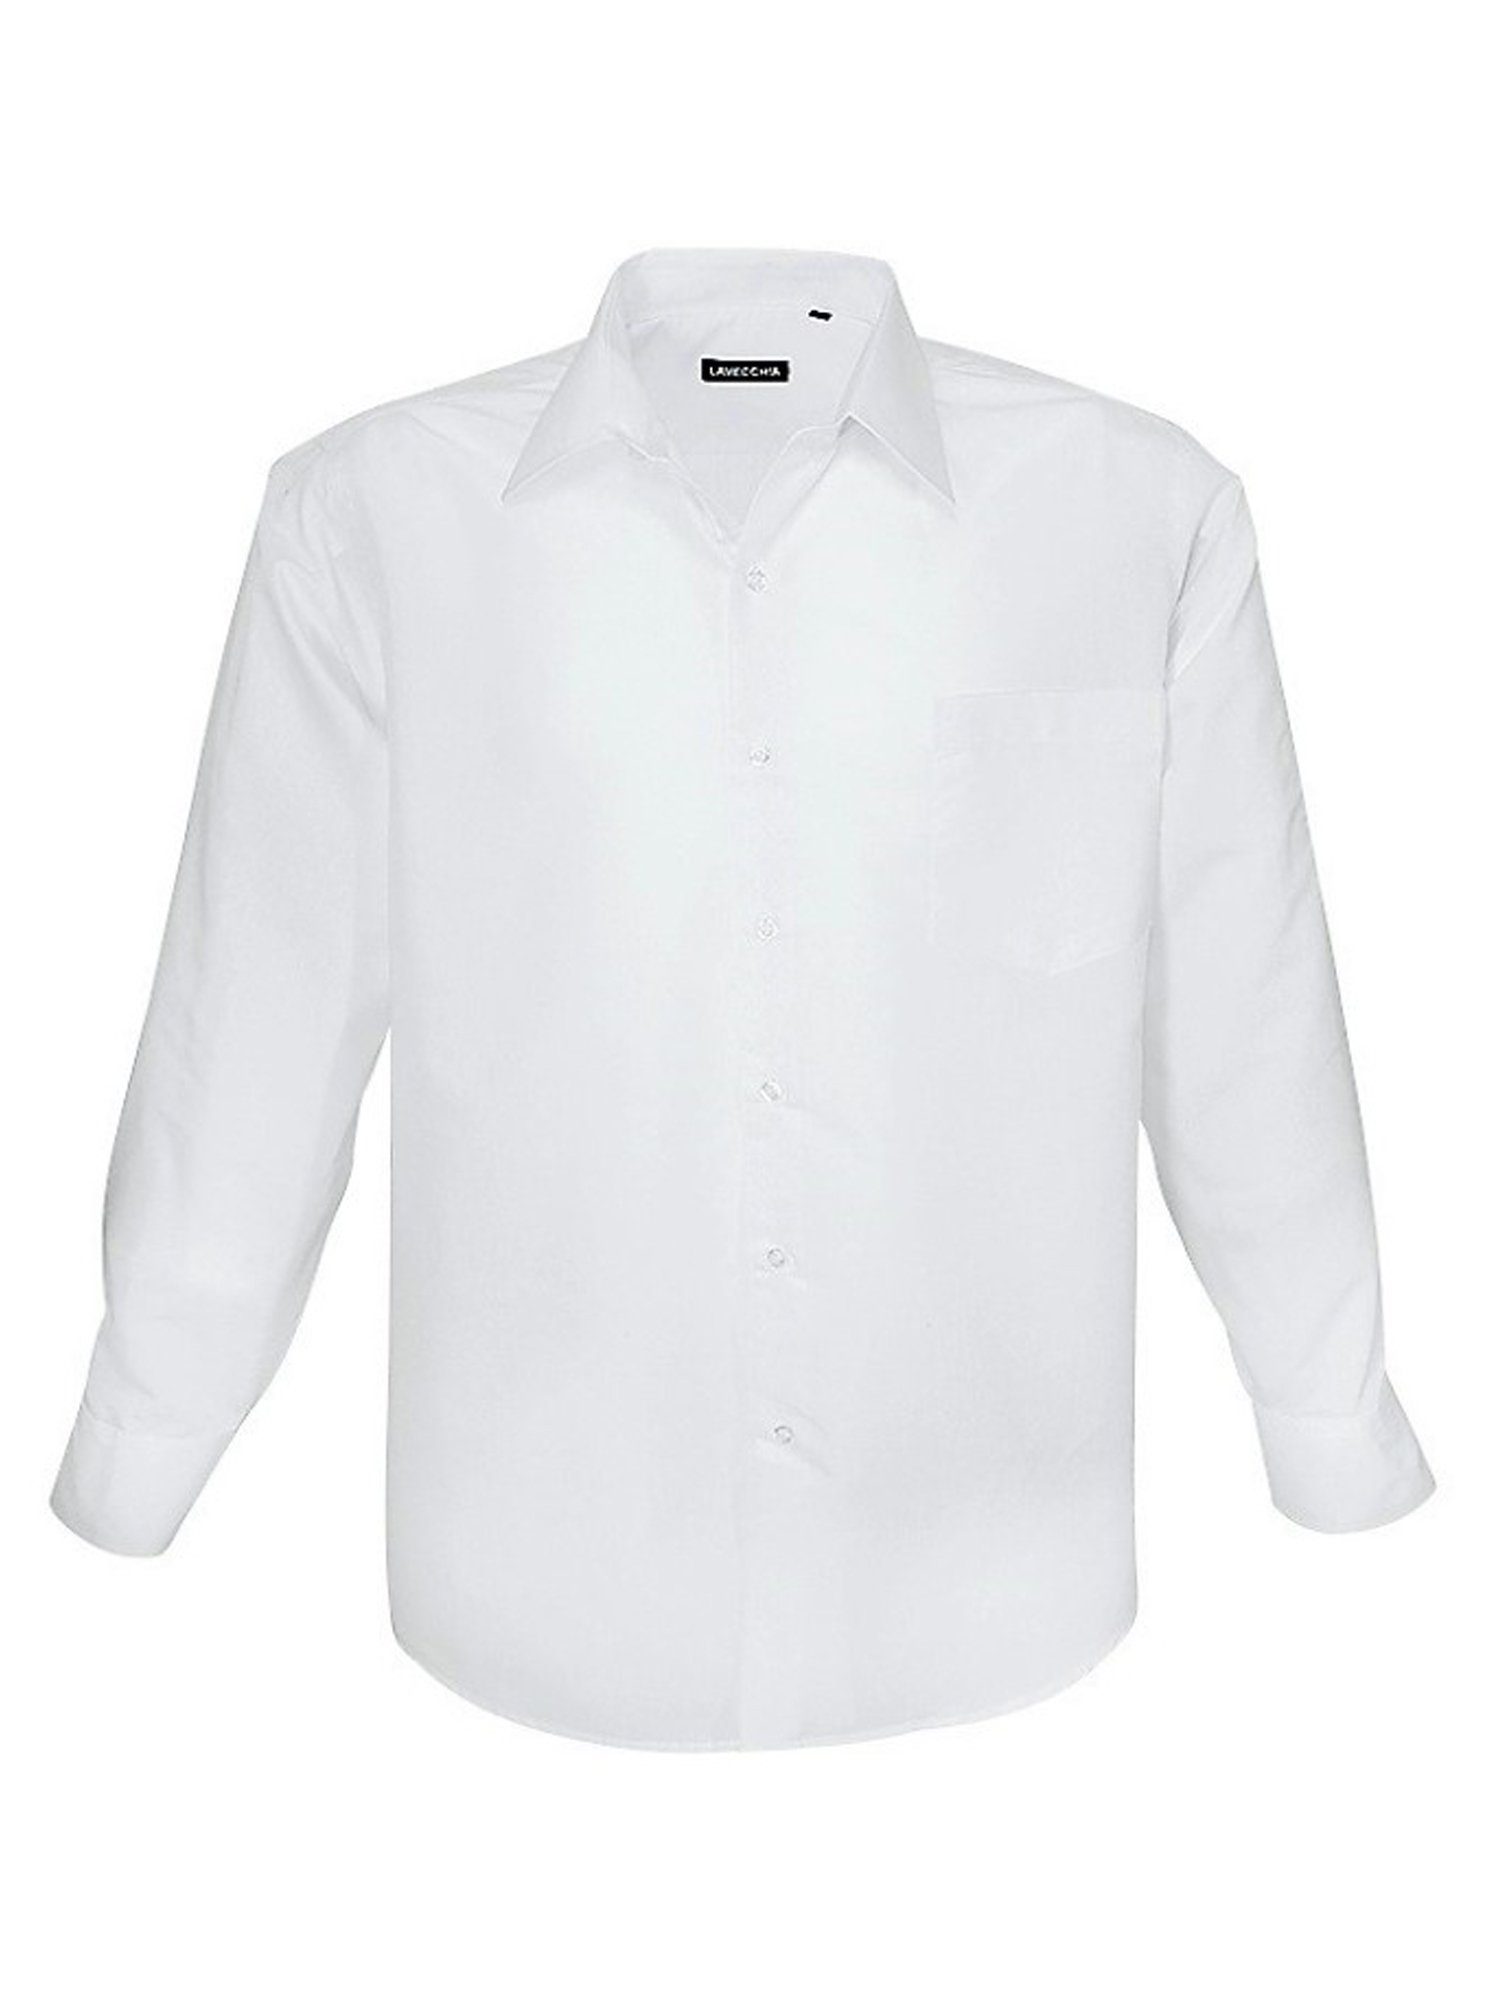 weiß HLA-1314 Lavecchia Langarmhemd Herrenhemd Basic Hemd Übergrößen Herren